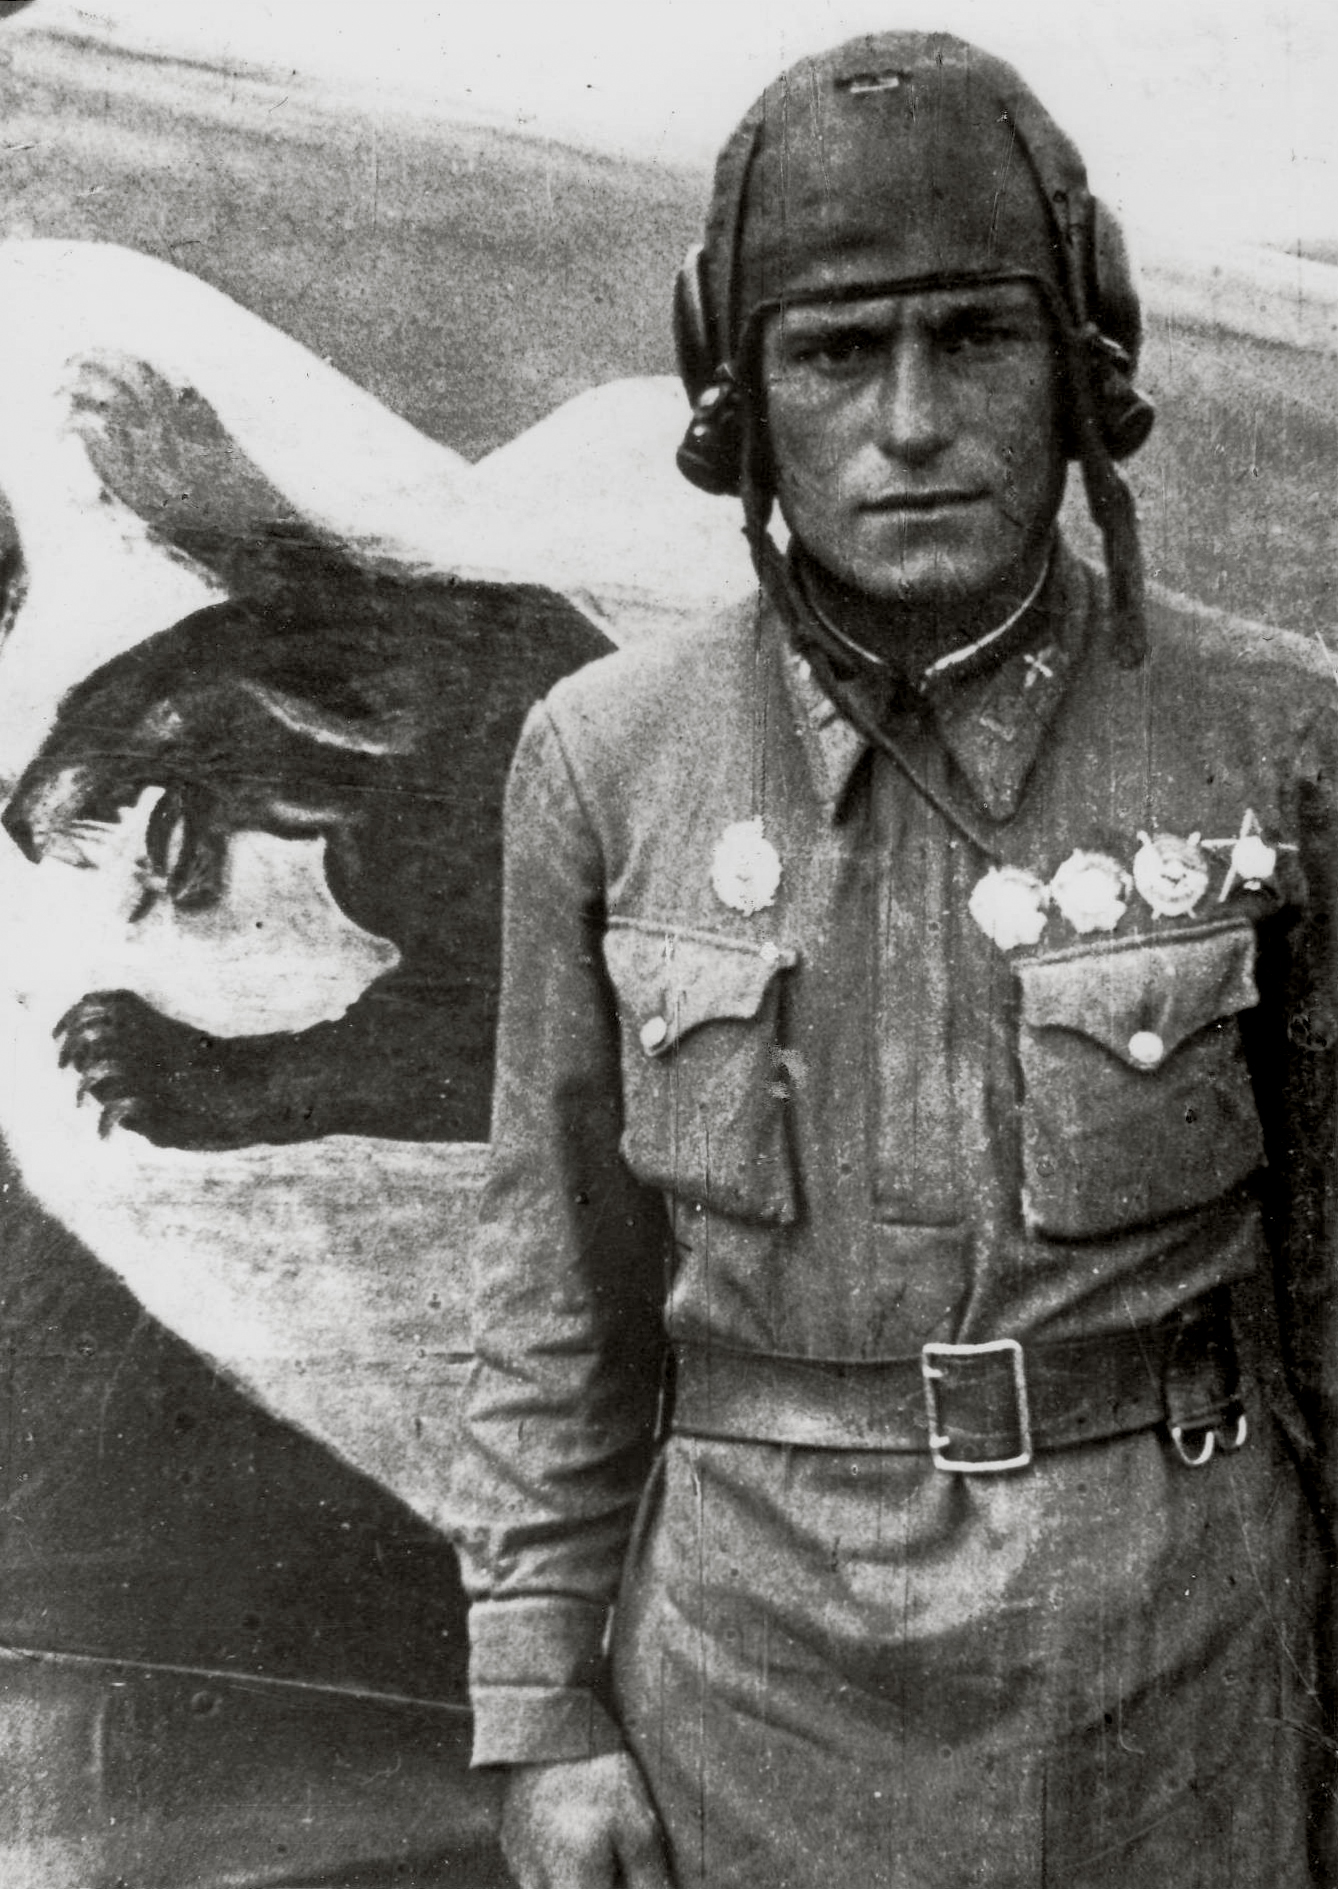 канкошев ахмет хан талович герой советского союза